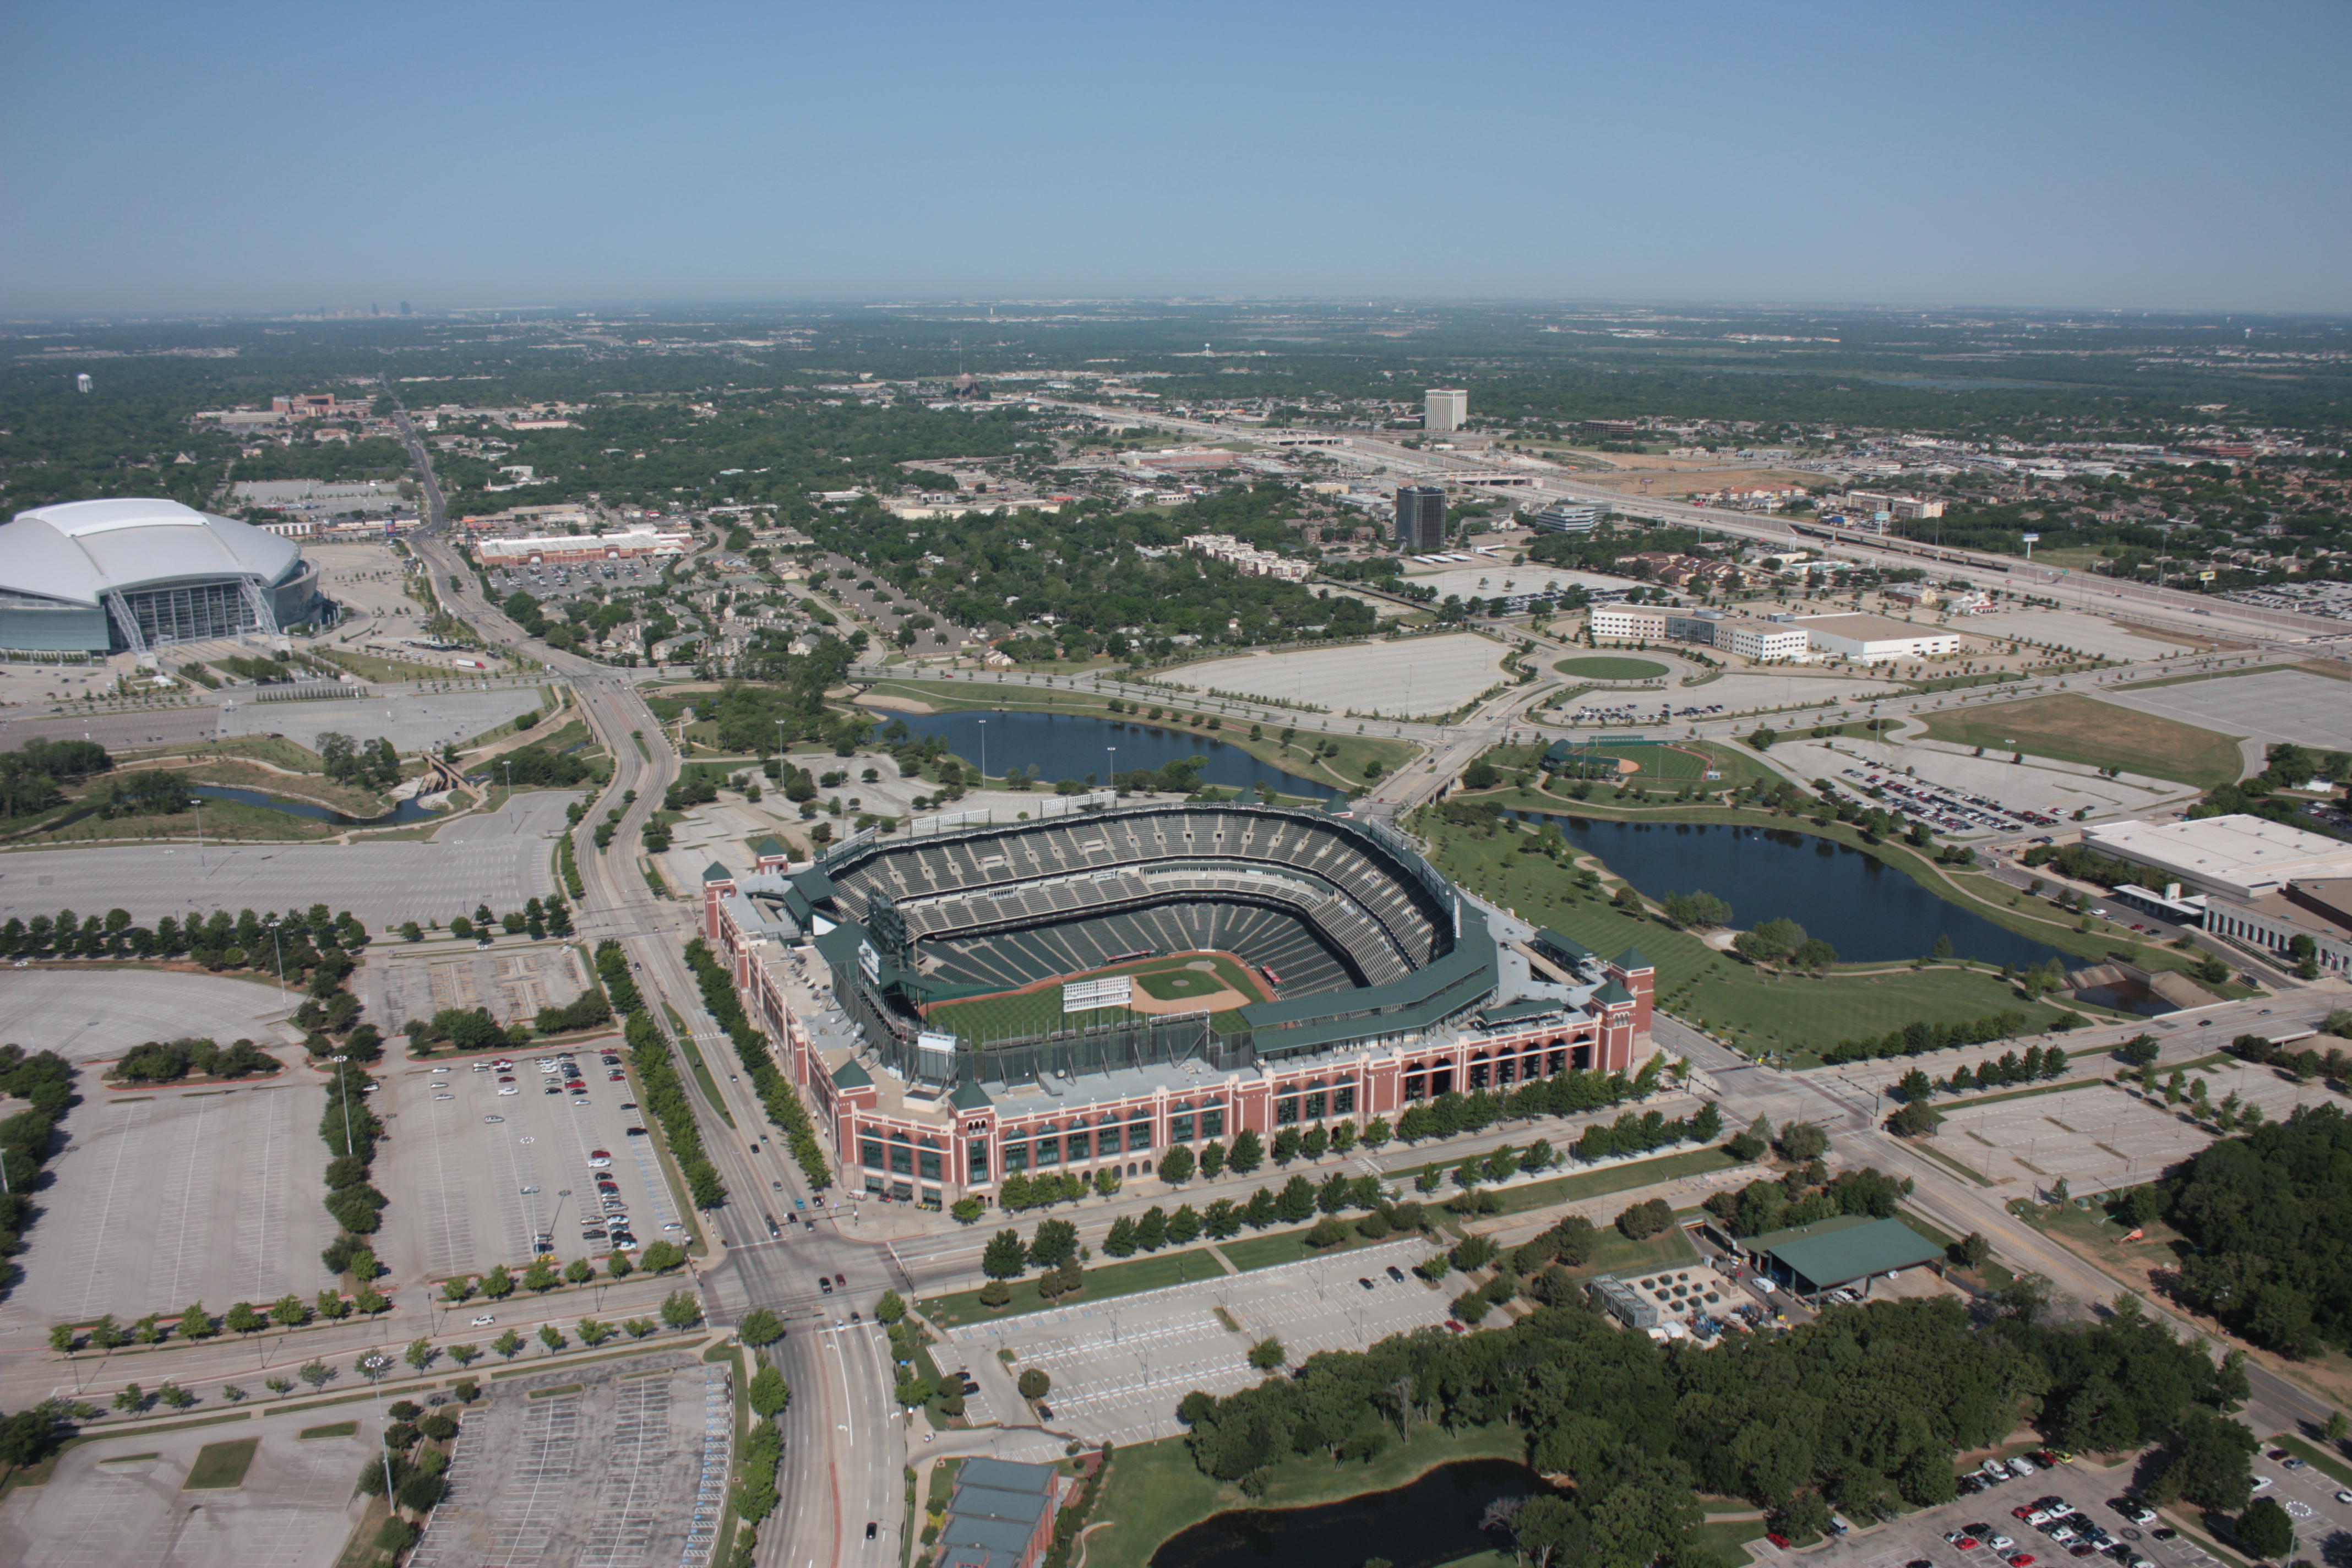 Arlington Stadium - History, Photos and more of the Texas Rangers